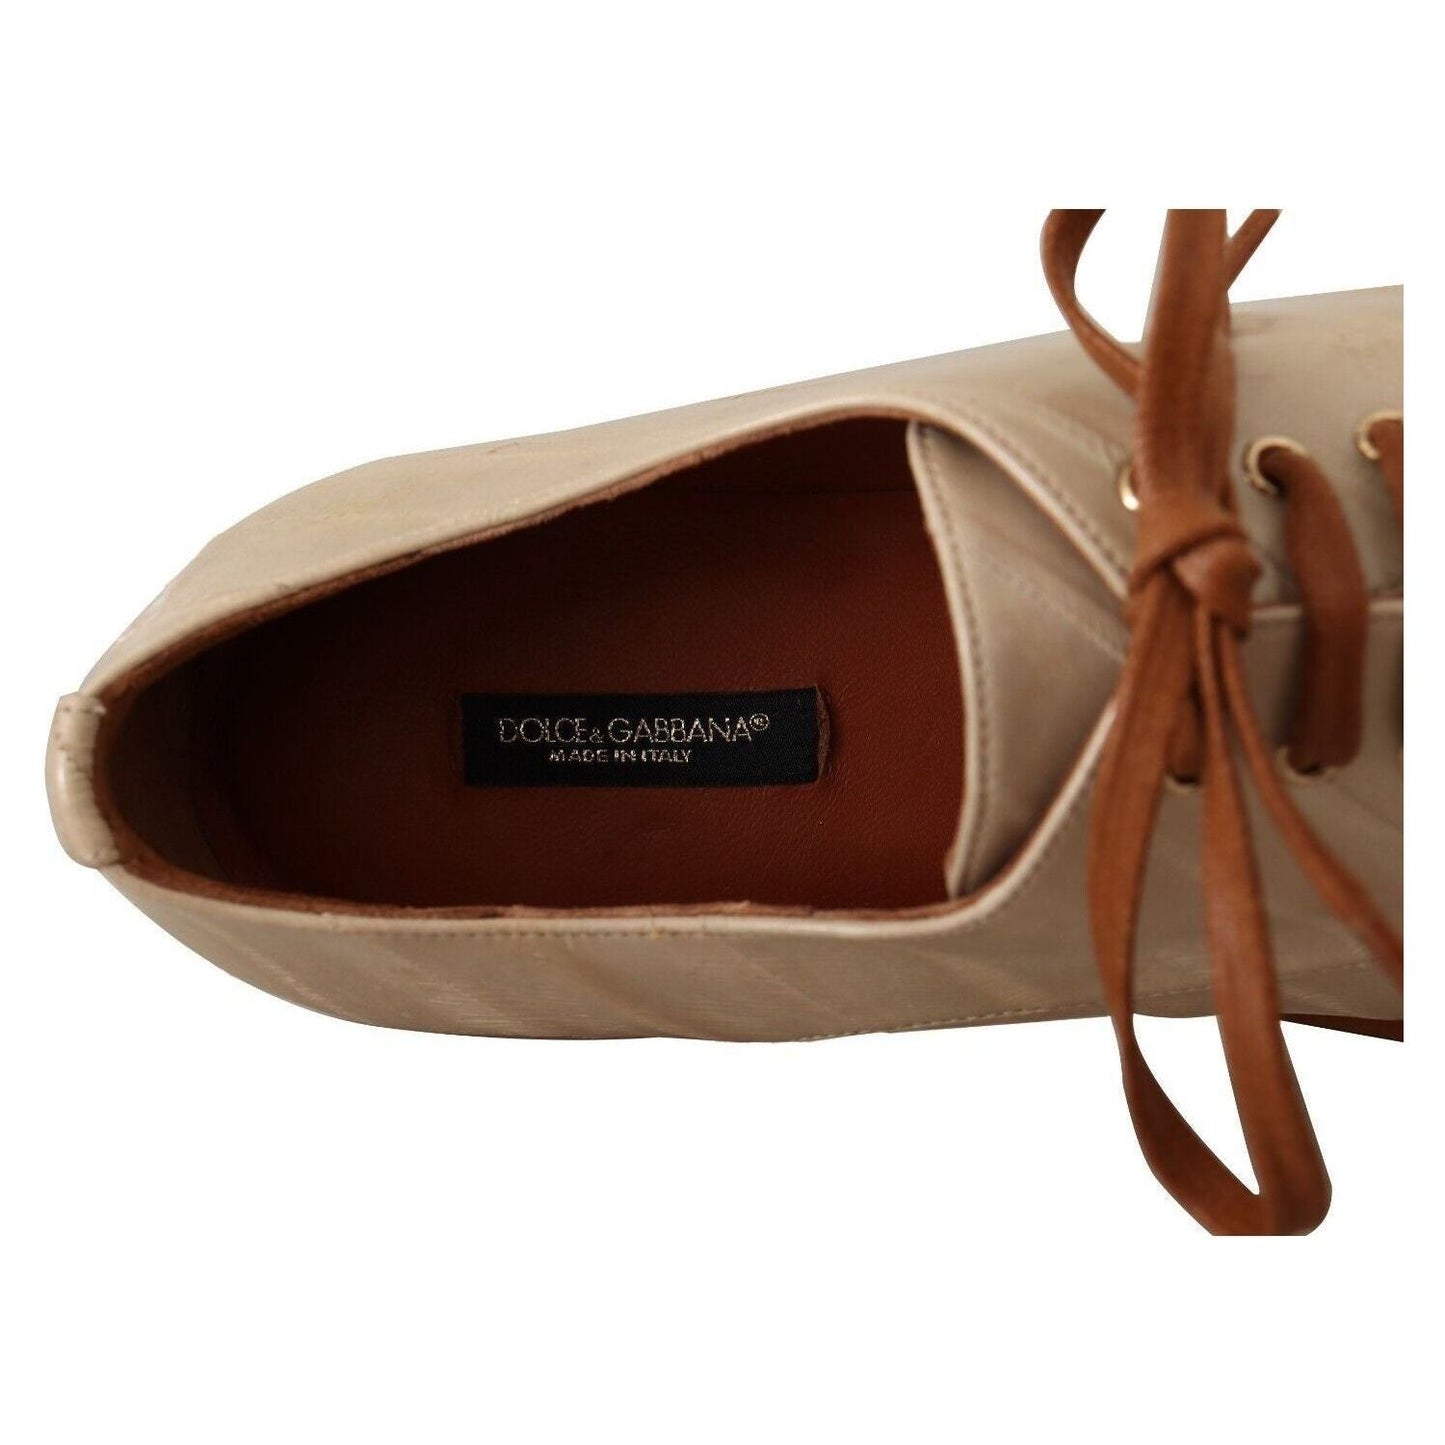 Dolce & Gabbana Elegant Beige Eel Leather Formal Flats white-eel-leather-lace-up-formal-flats-shoes s-l1600-6-21-e389189a-494.jpg